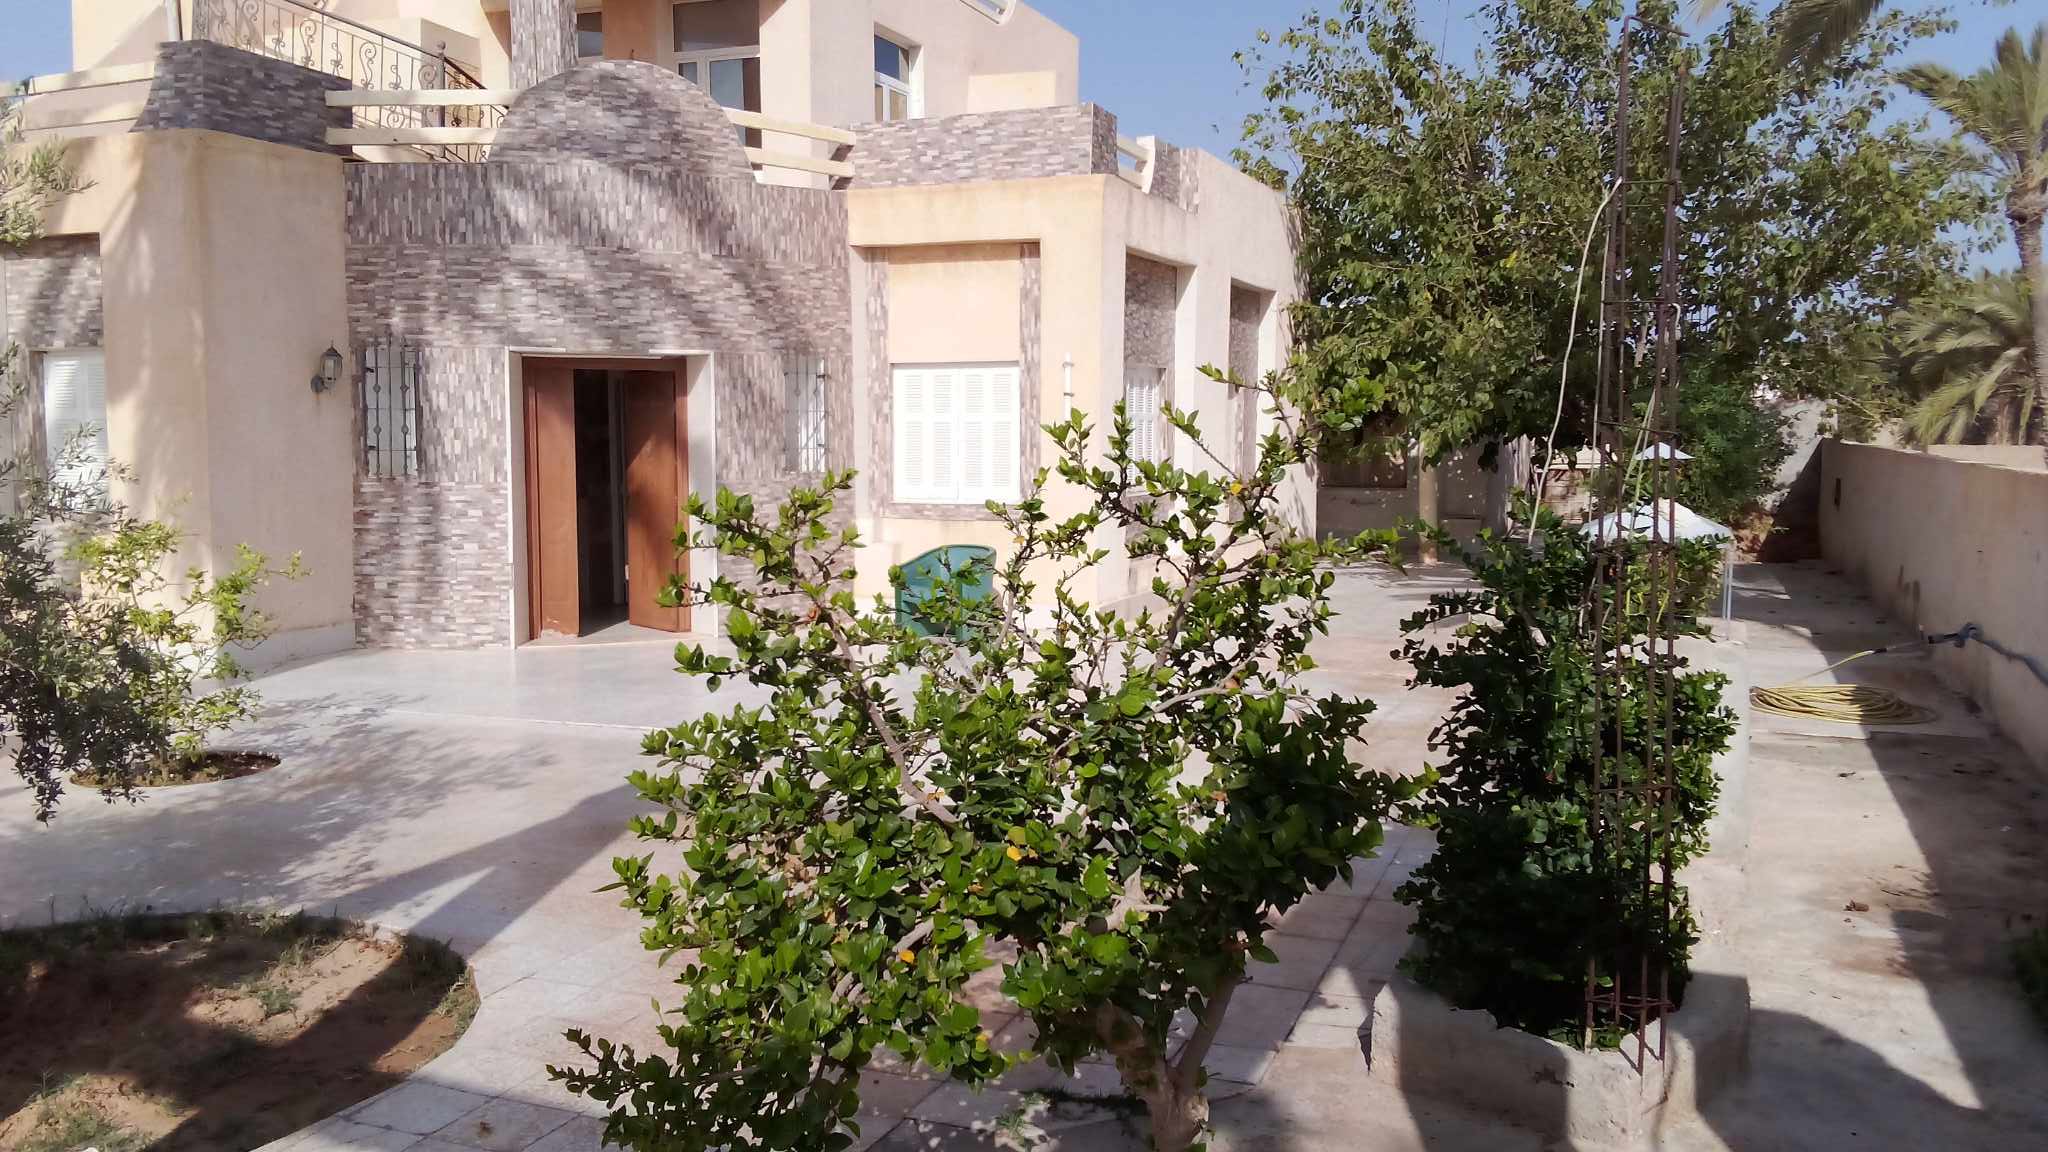 Djerba - Houmet Essouk Djerba  Vente Maisons Villa djerba  ghizen